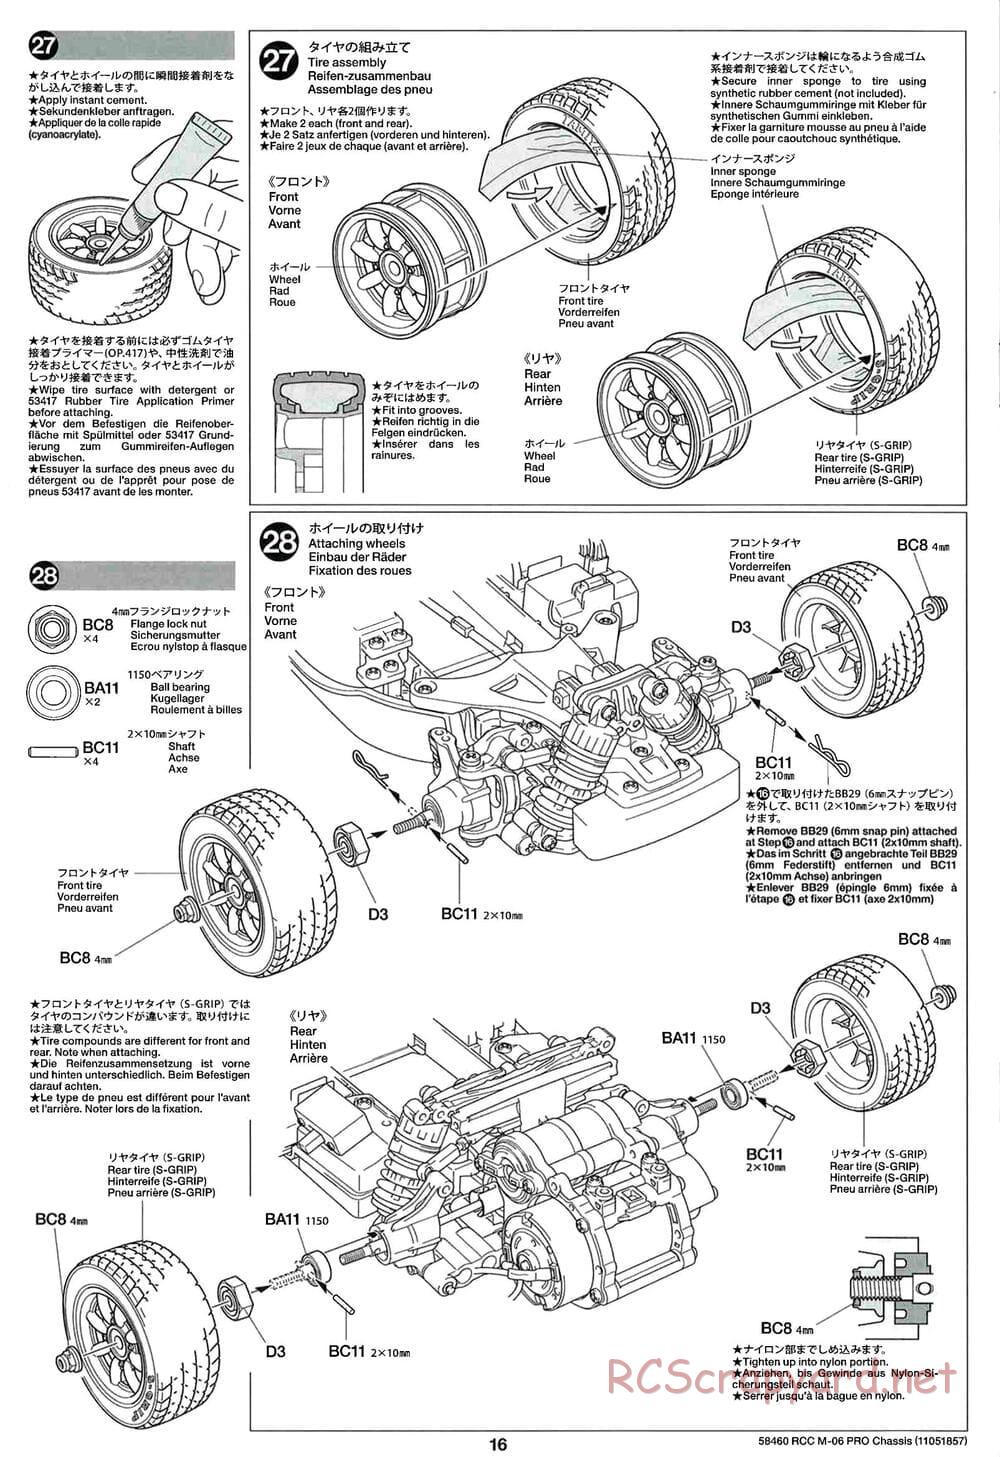 Tamiya - M-06 Pro Chassis - Manual - Page 16